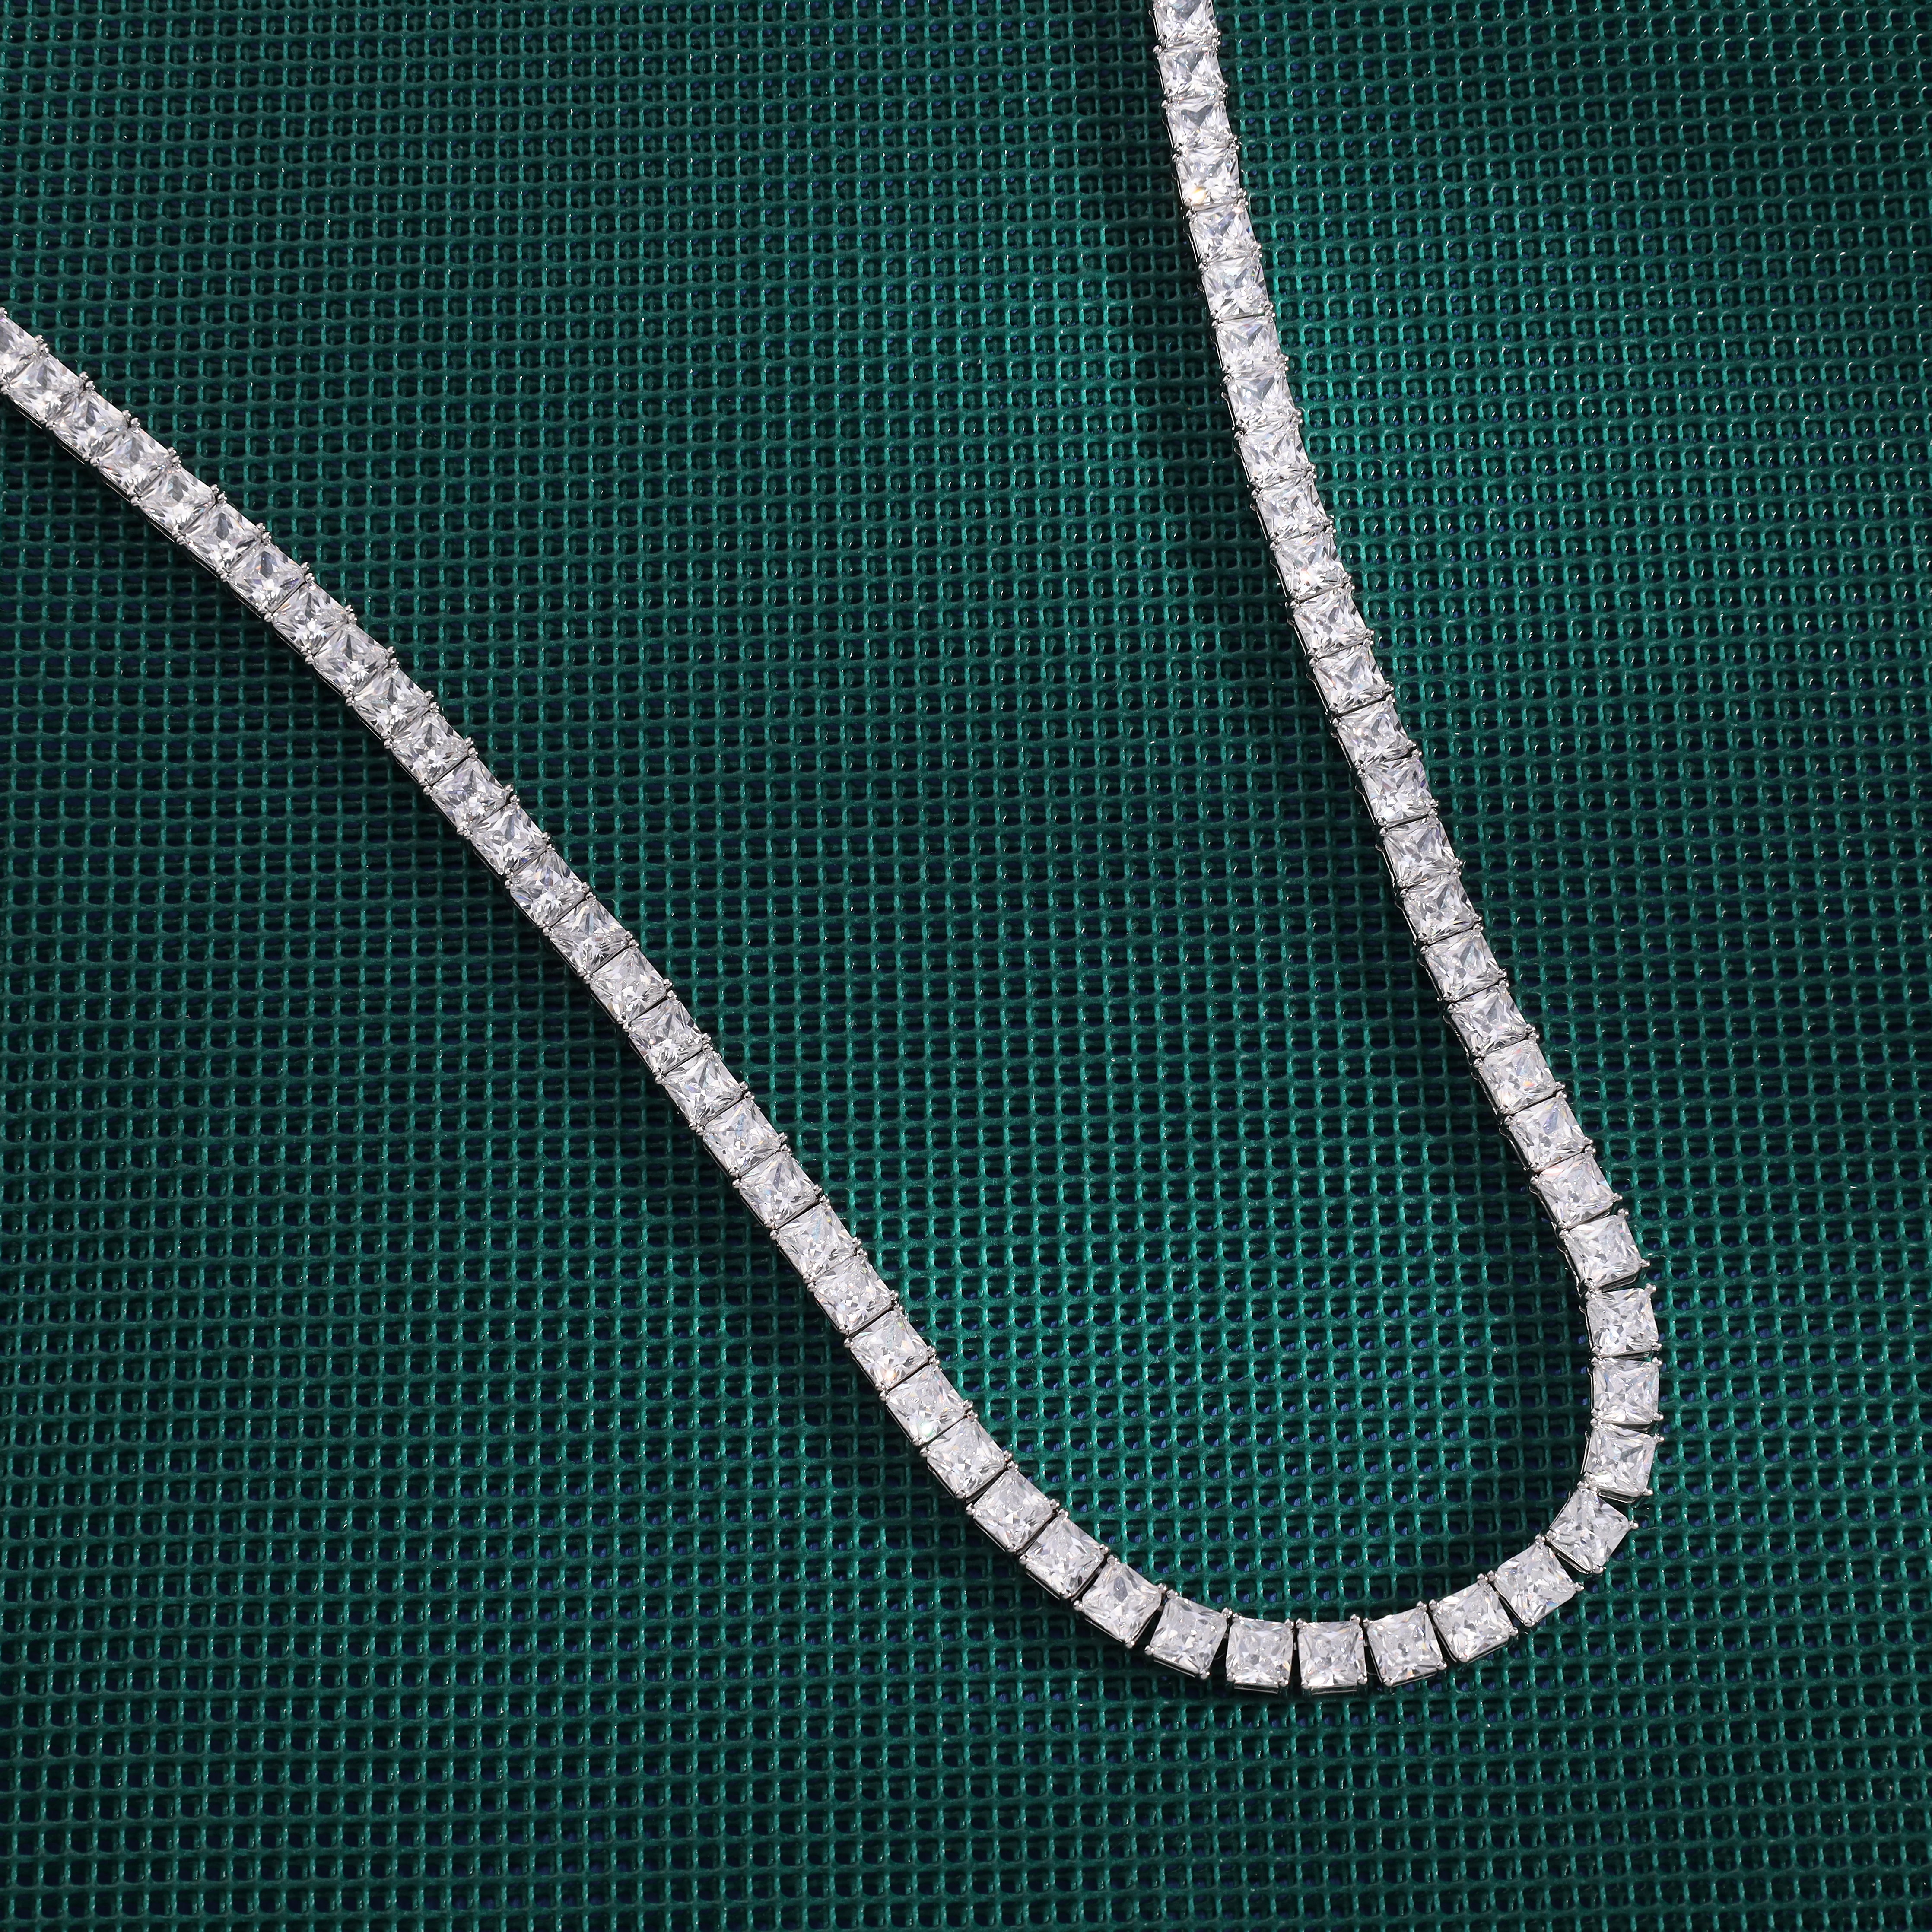 Iced Out Tennis chain 6mm breit 50cm lang aus 925 Sterling Silber (K862) - Taipan Schmuck